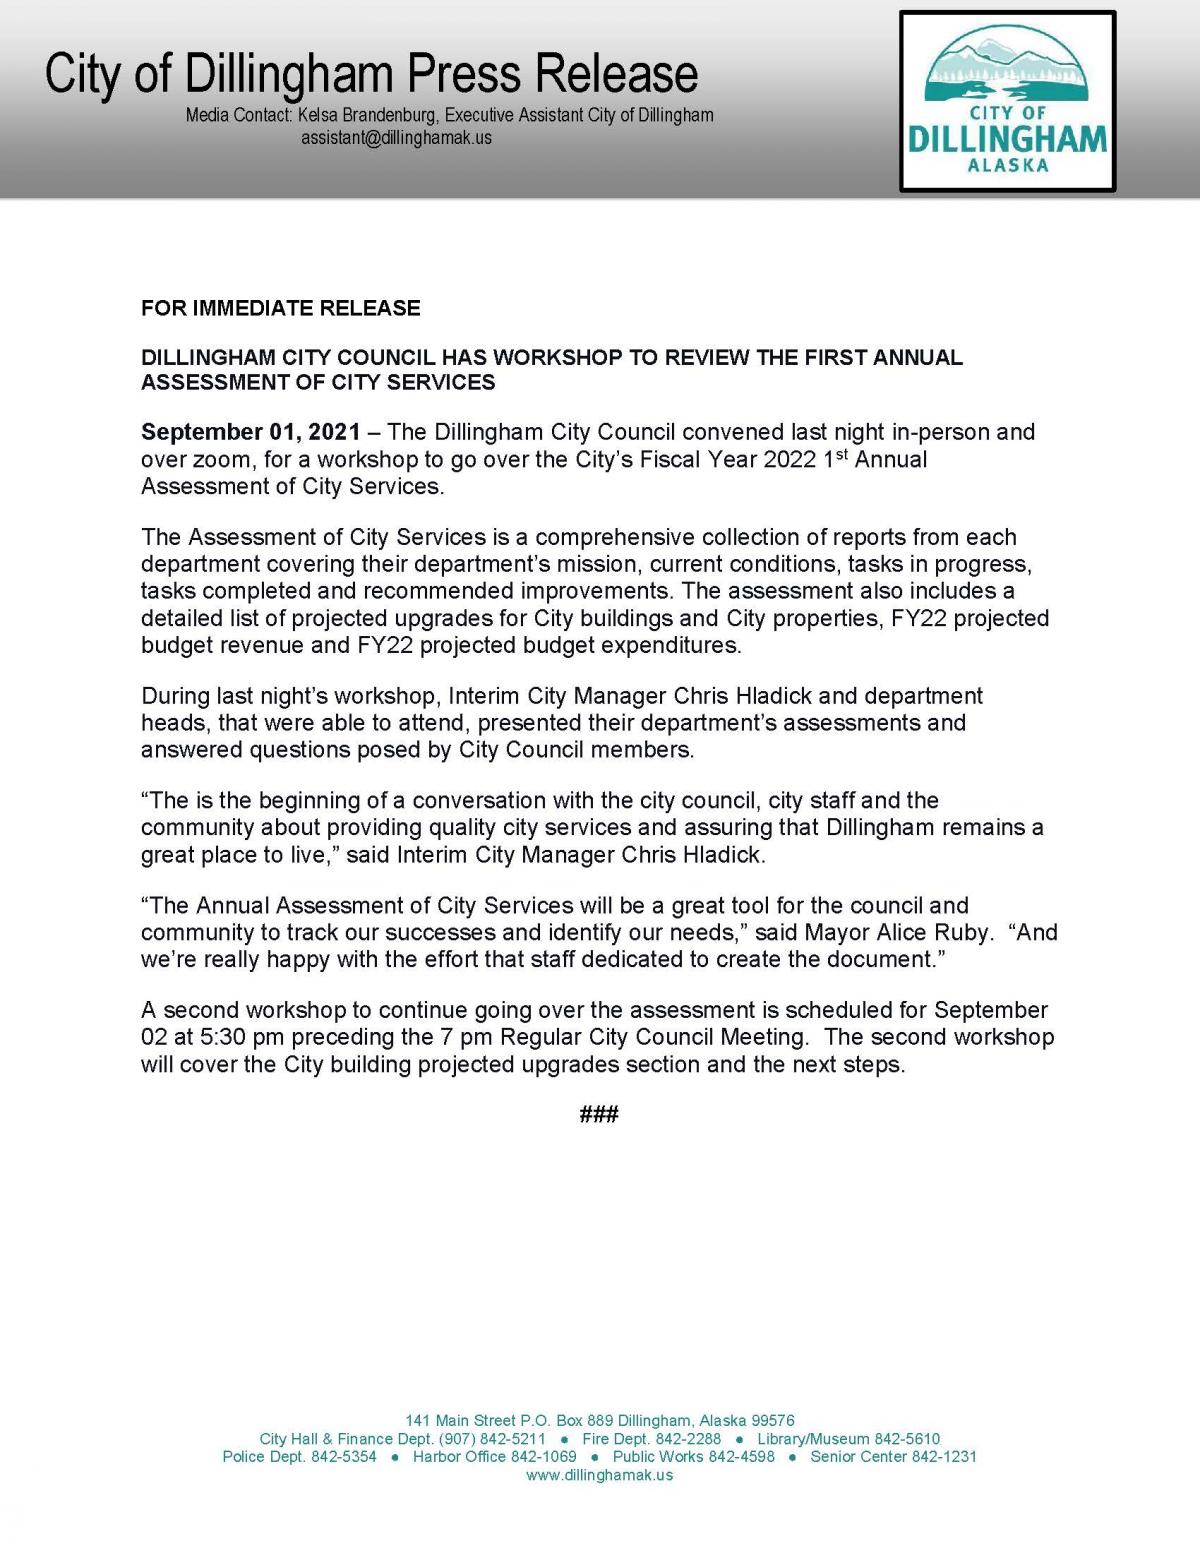 September 01, 2021 City of Dillingham Press Release